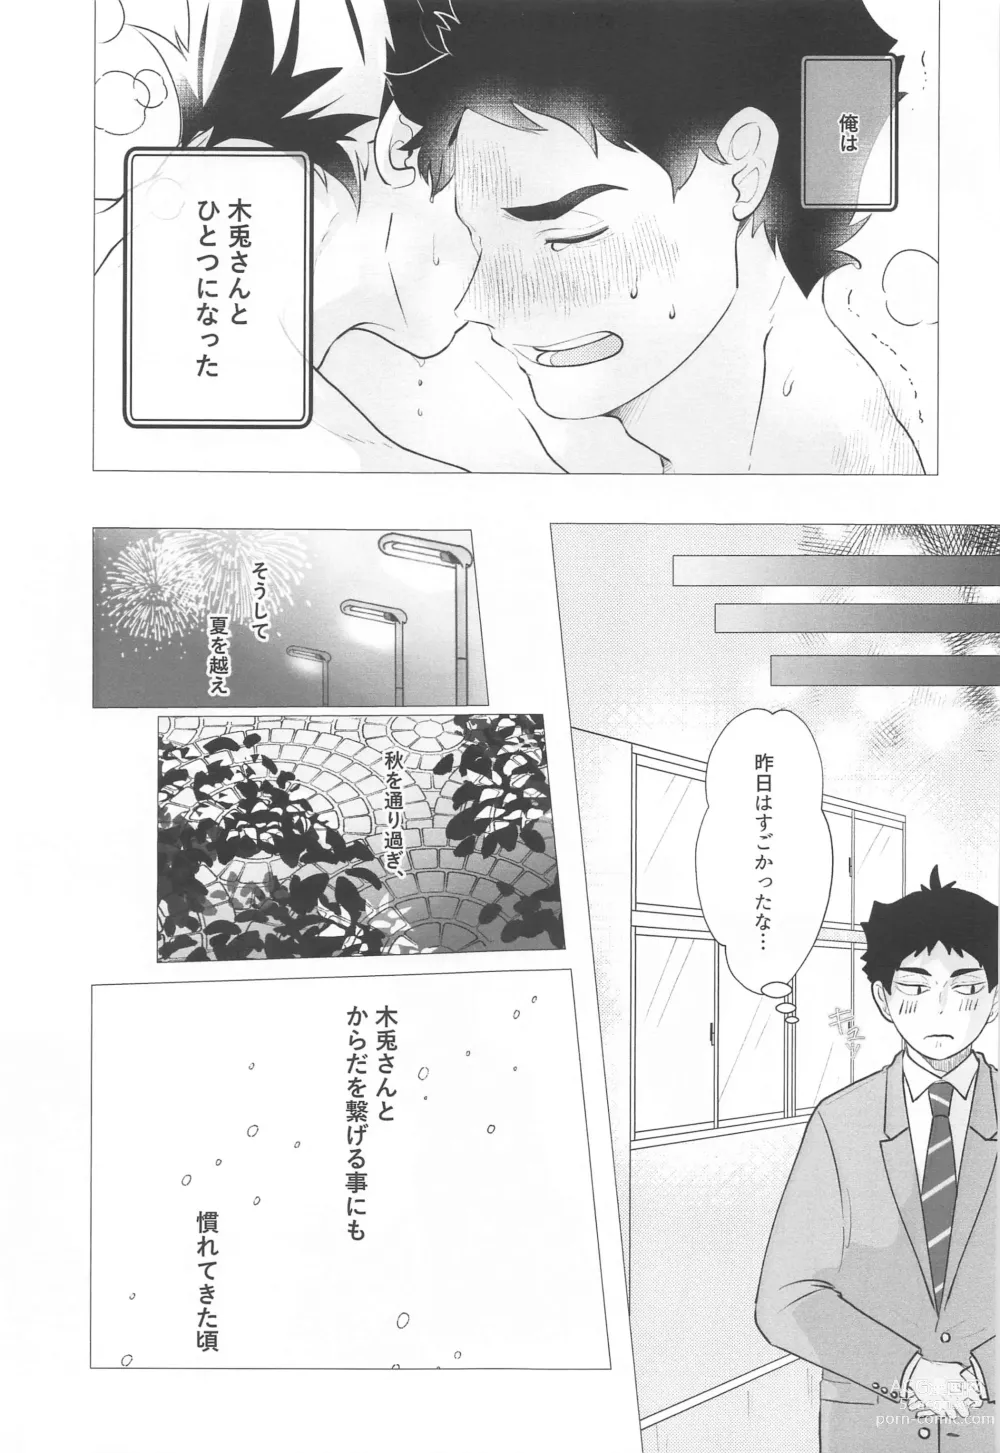 Page 6 of doujinshi Magarinari ni mo Koibito nanode